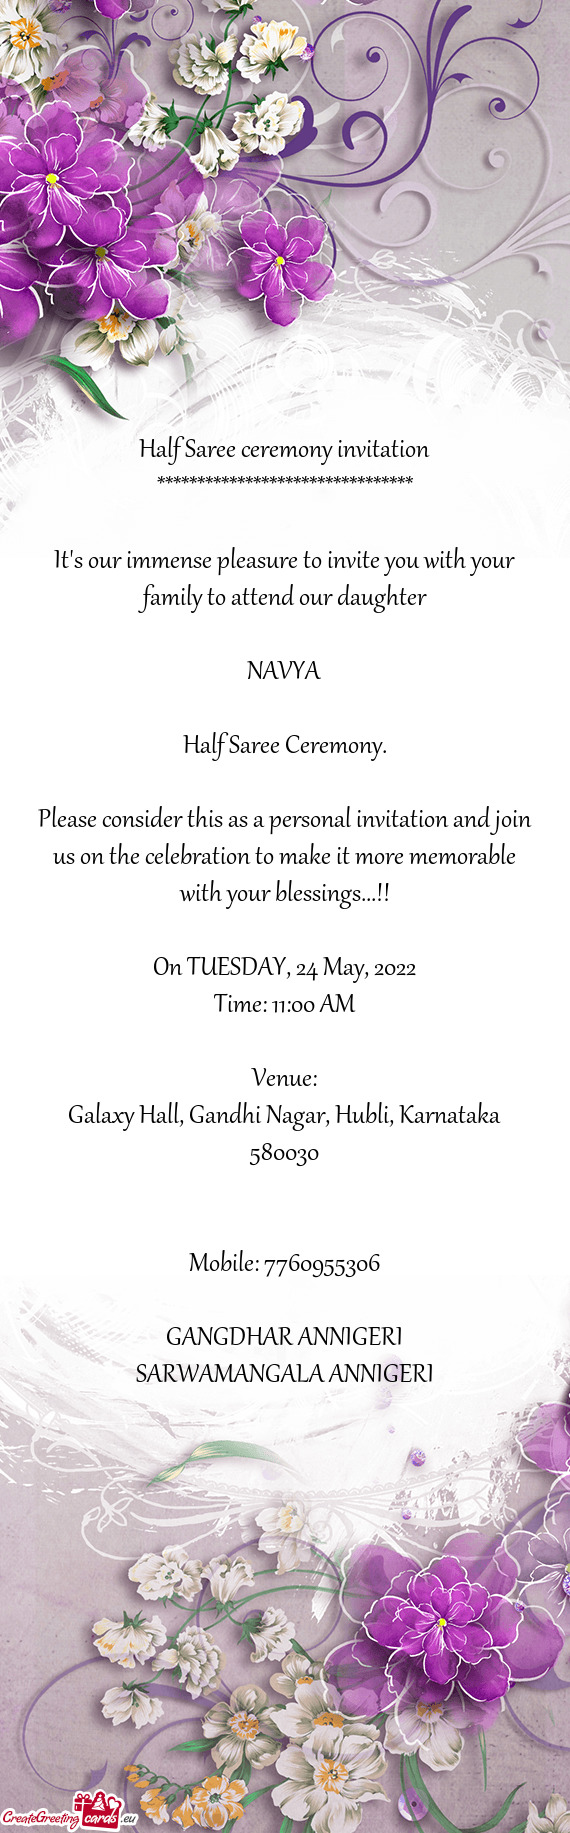 Galaxy Hall, Gandhi Nagar, Hubli, Karnataka 580030